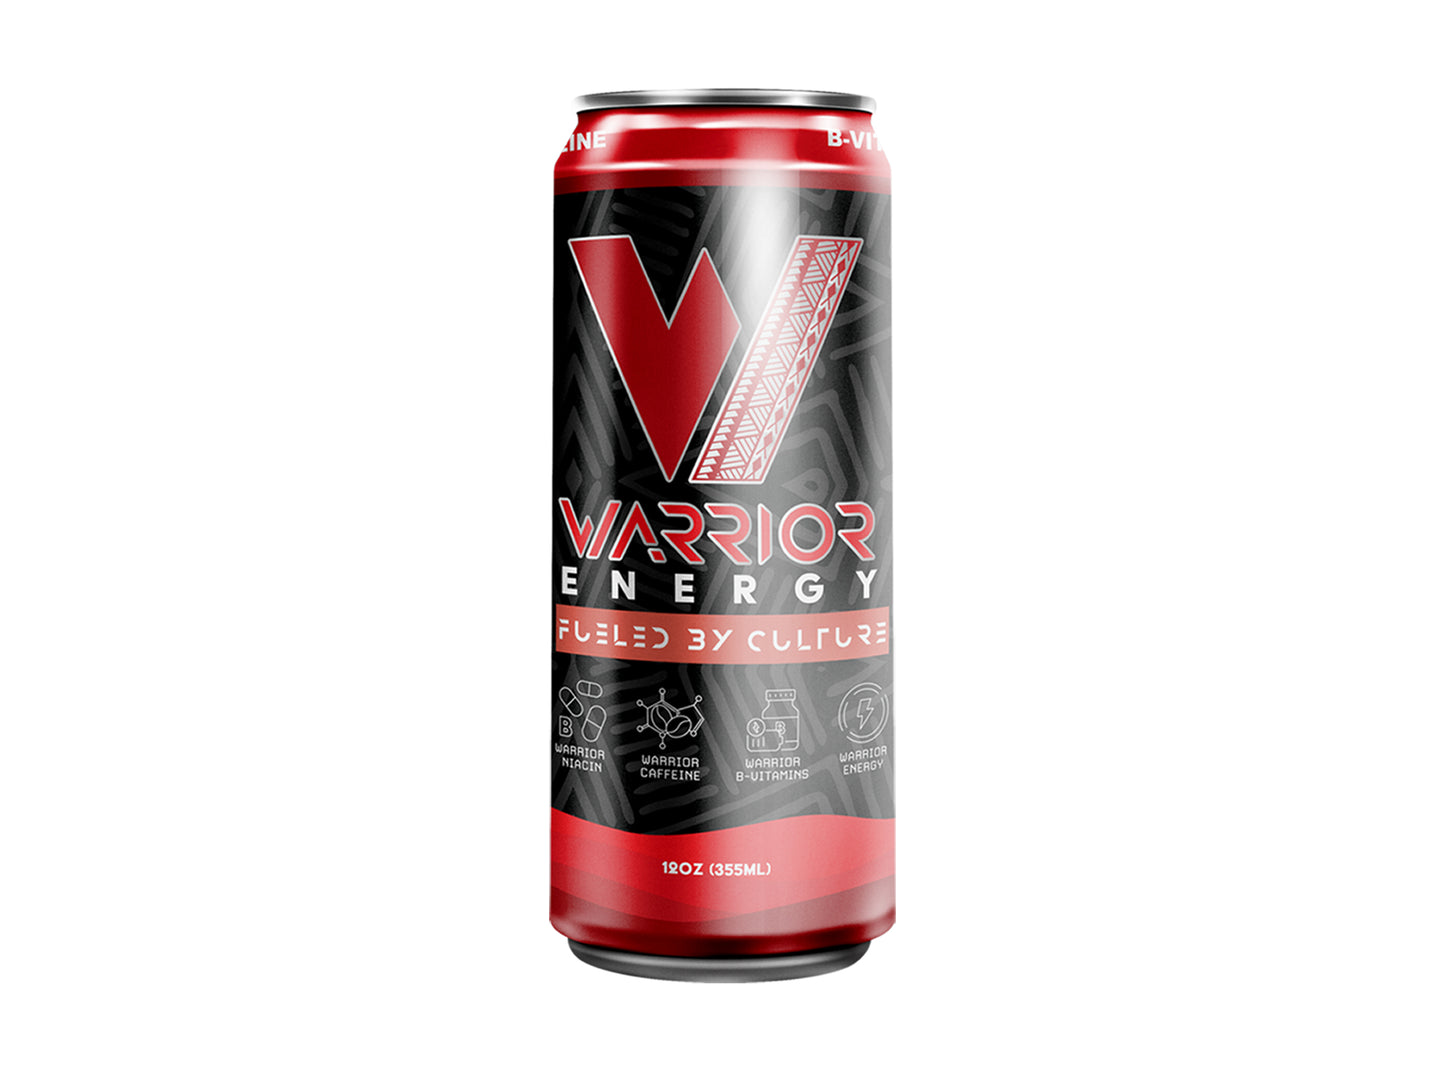 Warrior Energy Drink Regular Sugar 6 pack